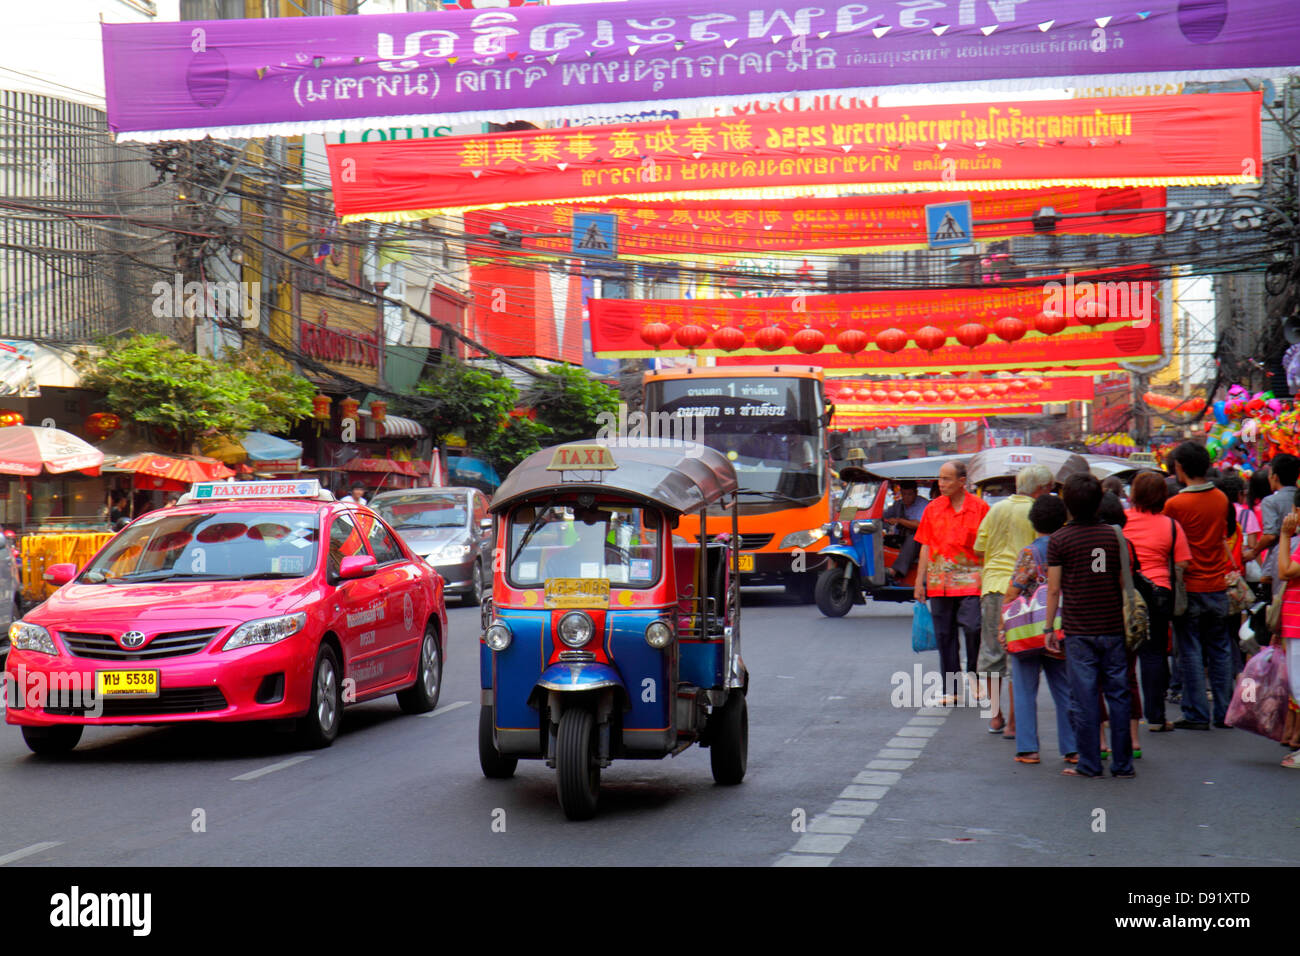 Bangkok Thailand, Thai, Samphanthawong, Chinatown, Yaowarat Road, Verkehr, Taxi, Auto-Rikscha, Tuk-Tuk, sam-lor, Bus, Bus, Taxis, Taxi, Taxis, Bus, Bus, Banner, Chi Stockfoto